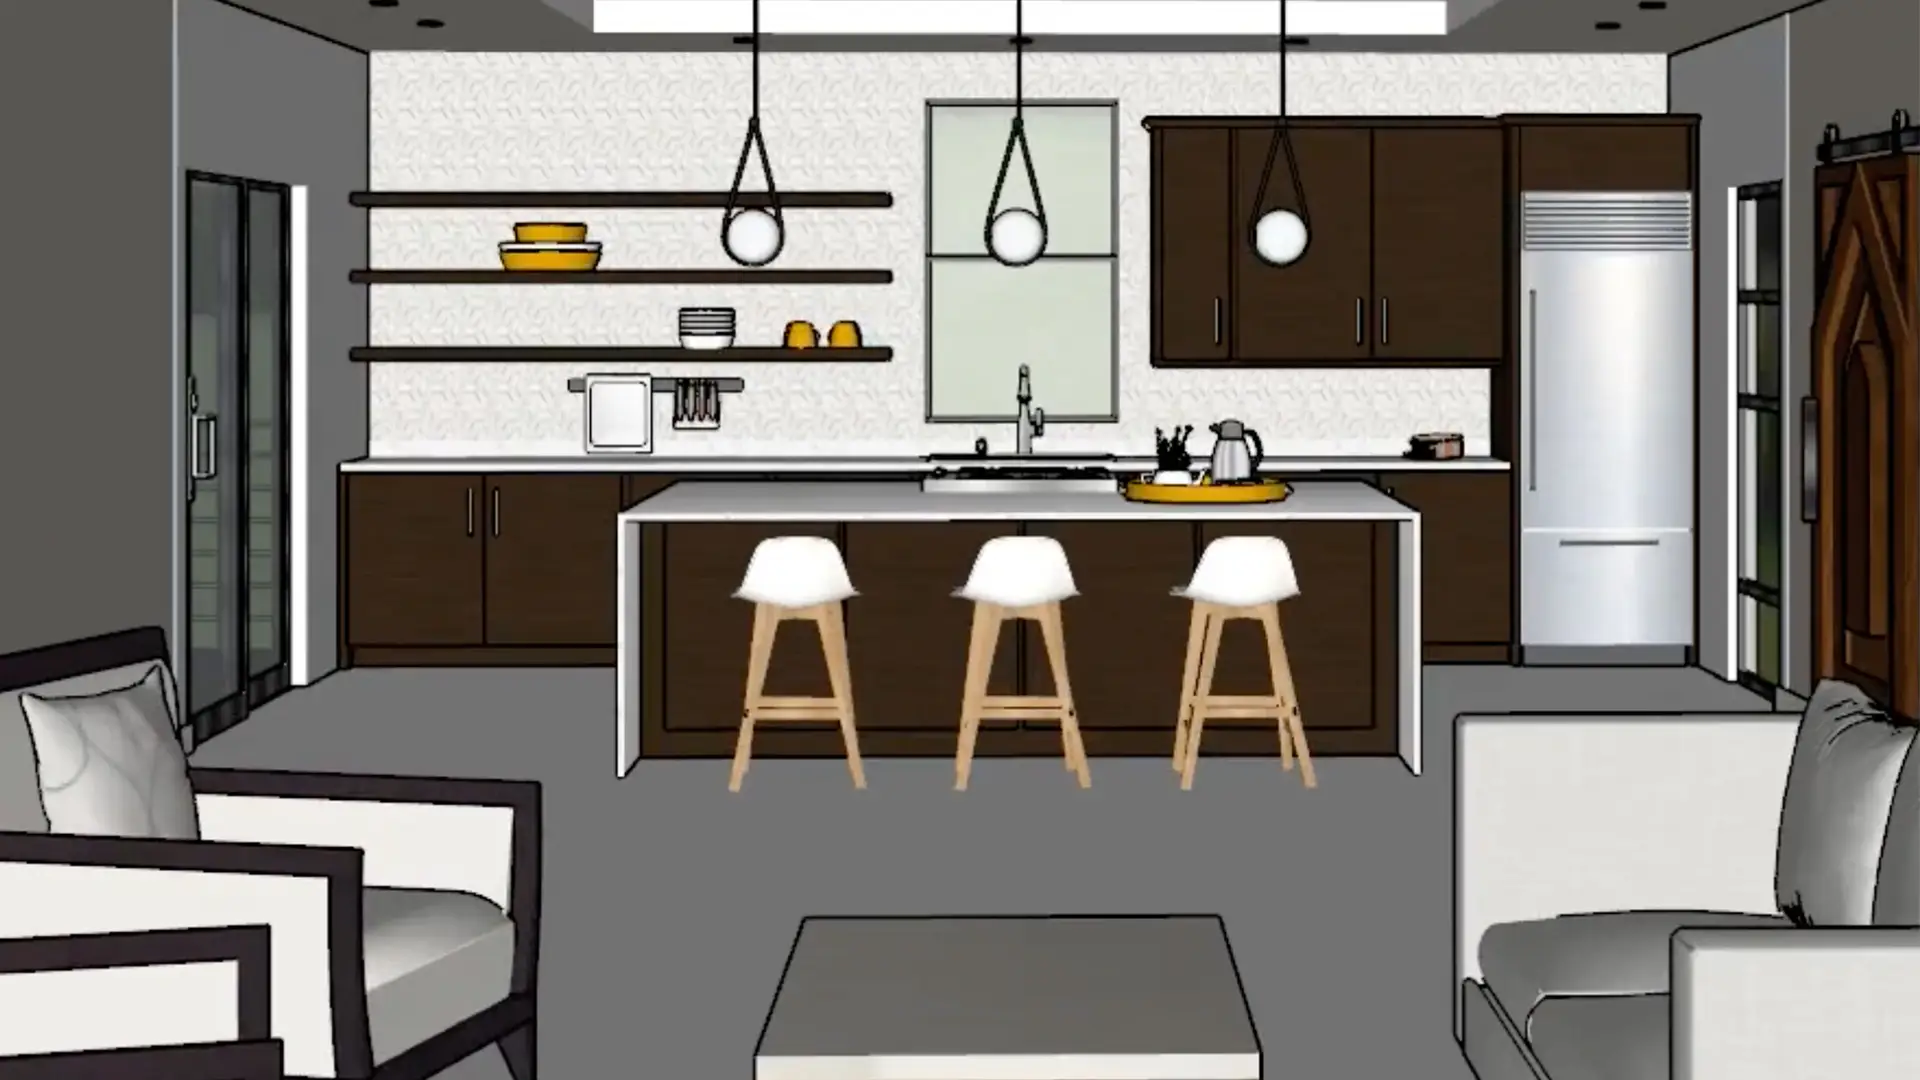 sketchup interior kitchen